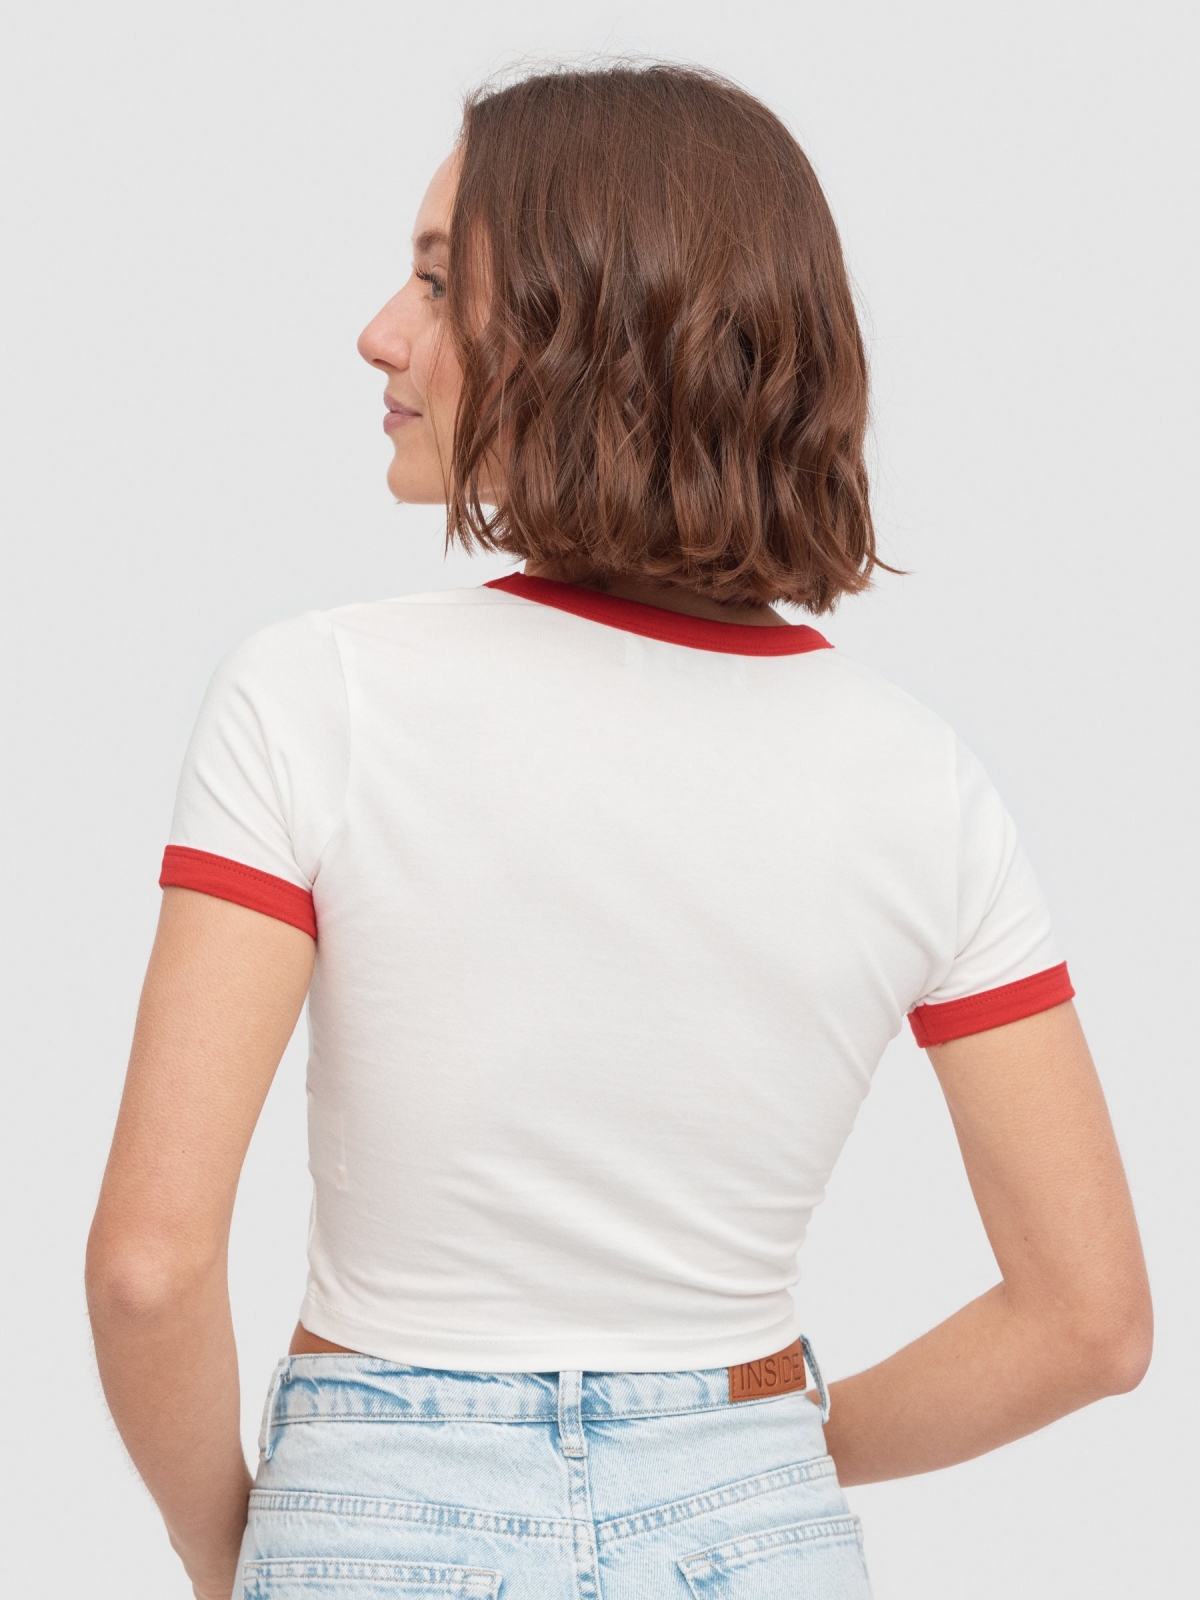 Camiseta contraste ositos blanco roto vista media trasera